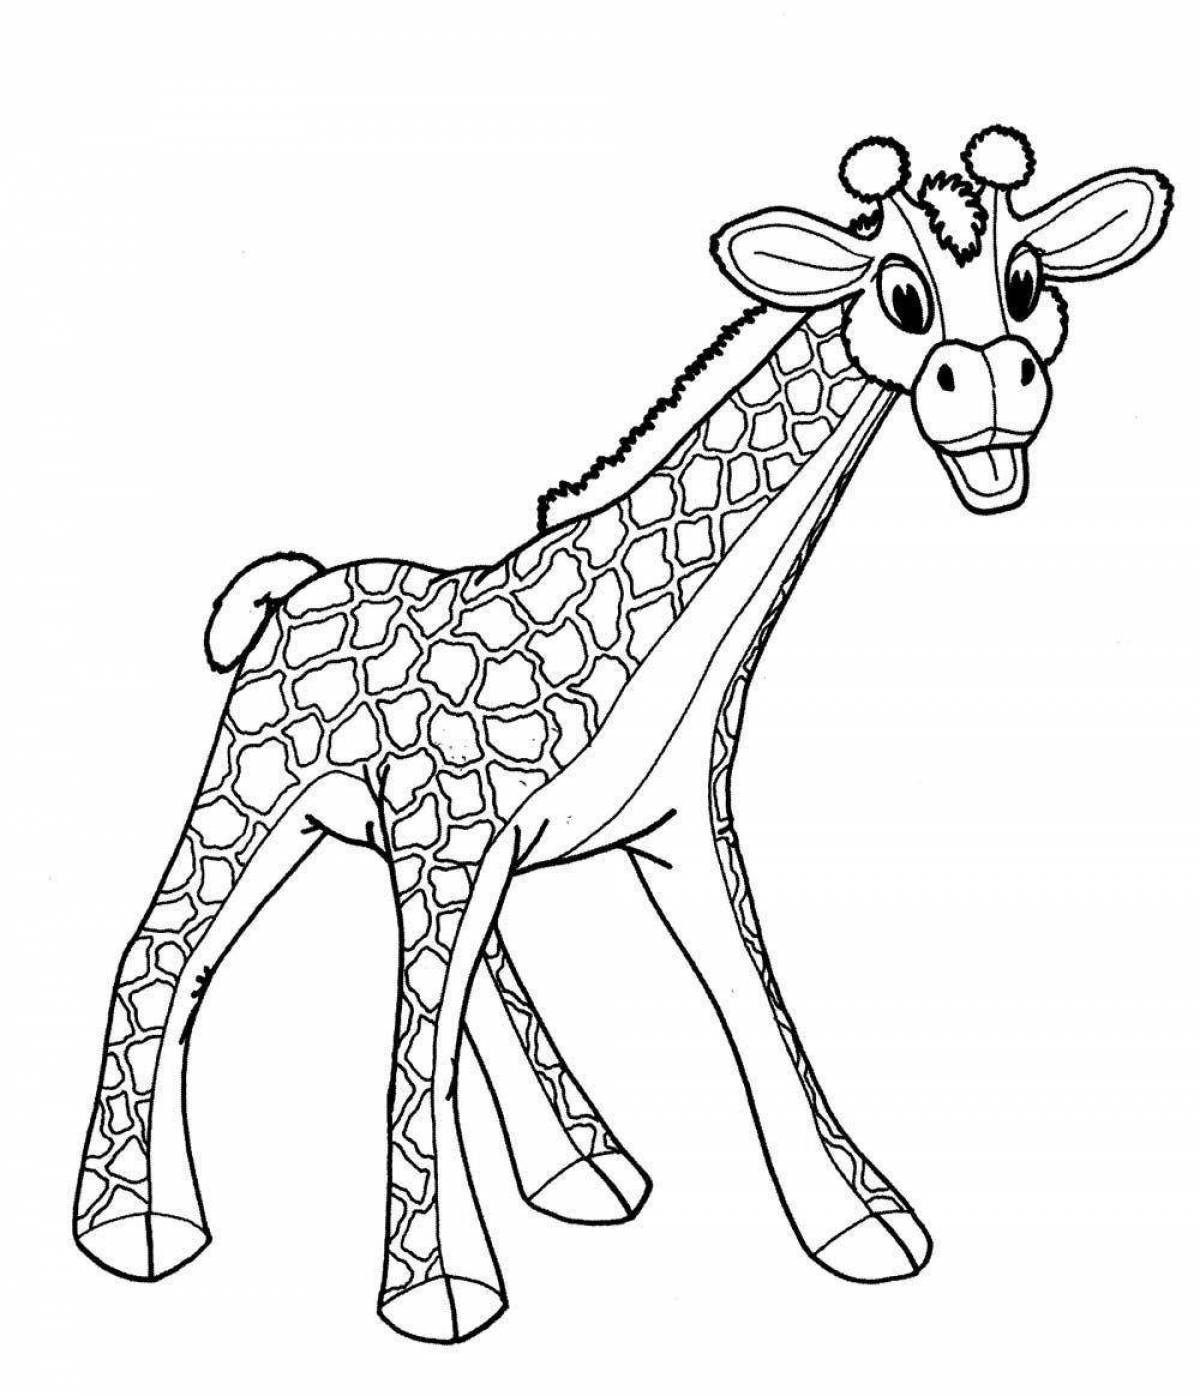 Coloring page playful giraffe